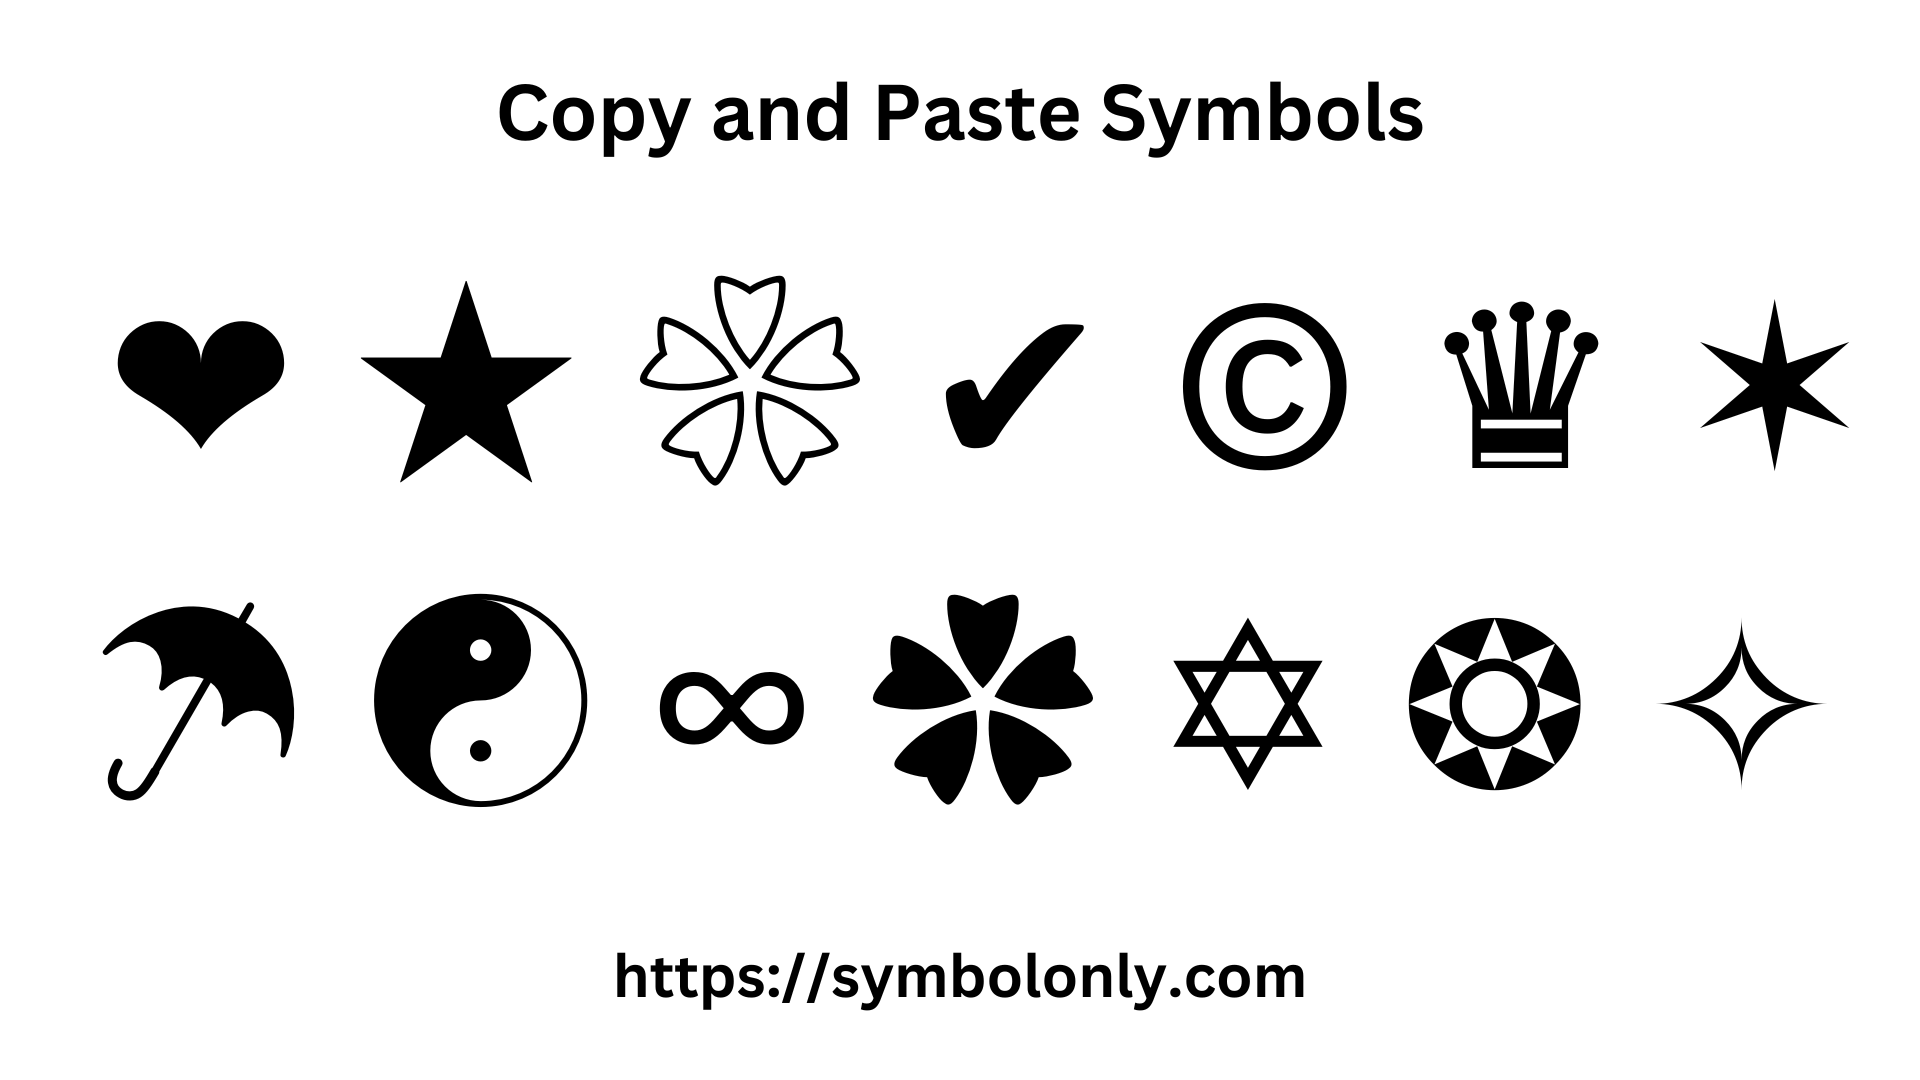 copy-and-paste-symbols-cool-text-symbols-symbolonly